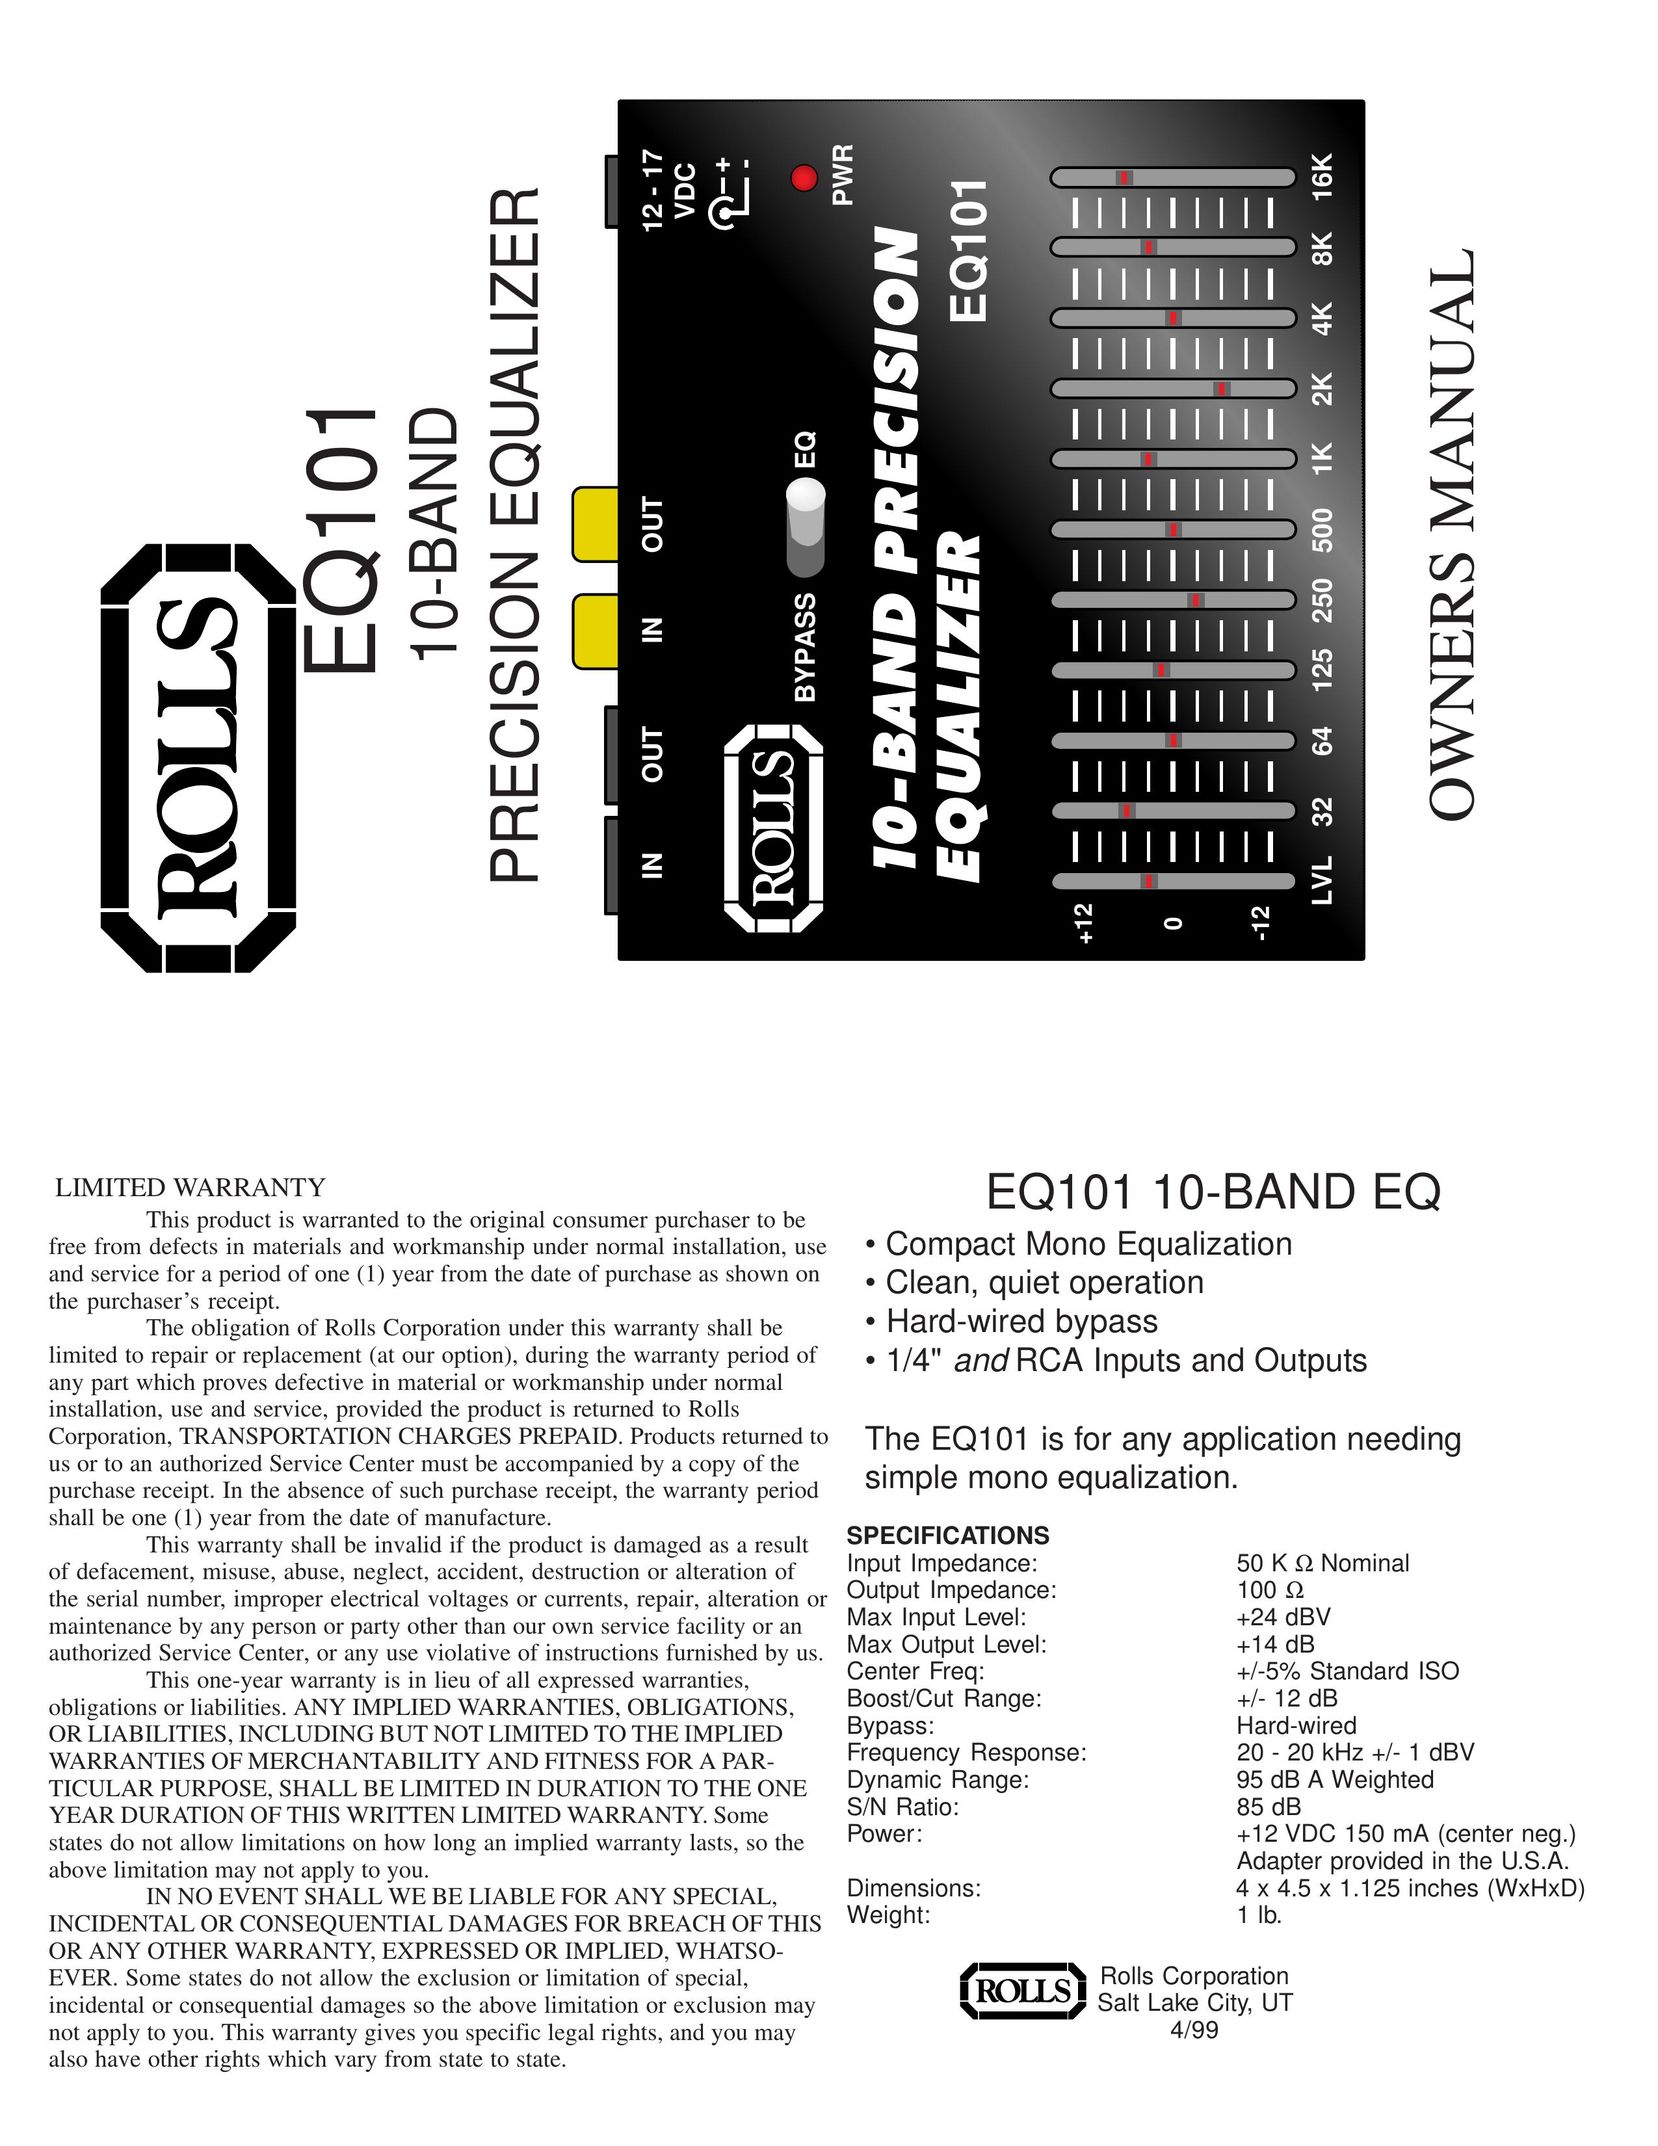 Rolls EQ101 Stereo Equalizer User Manual